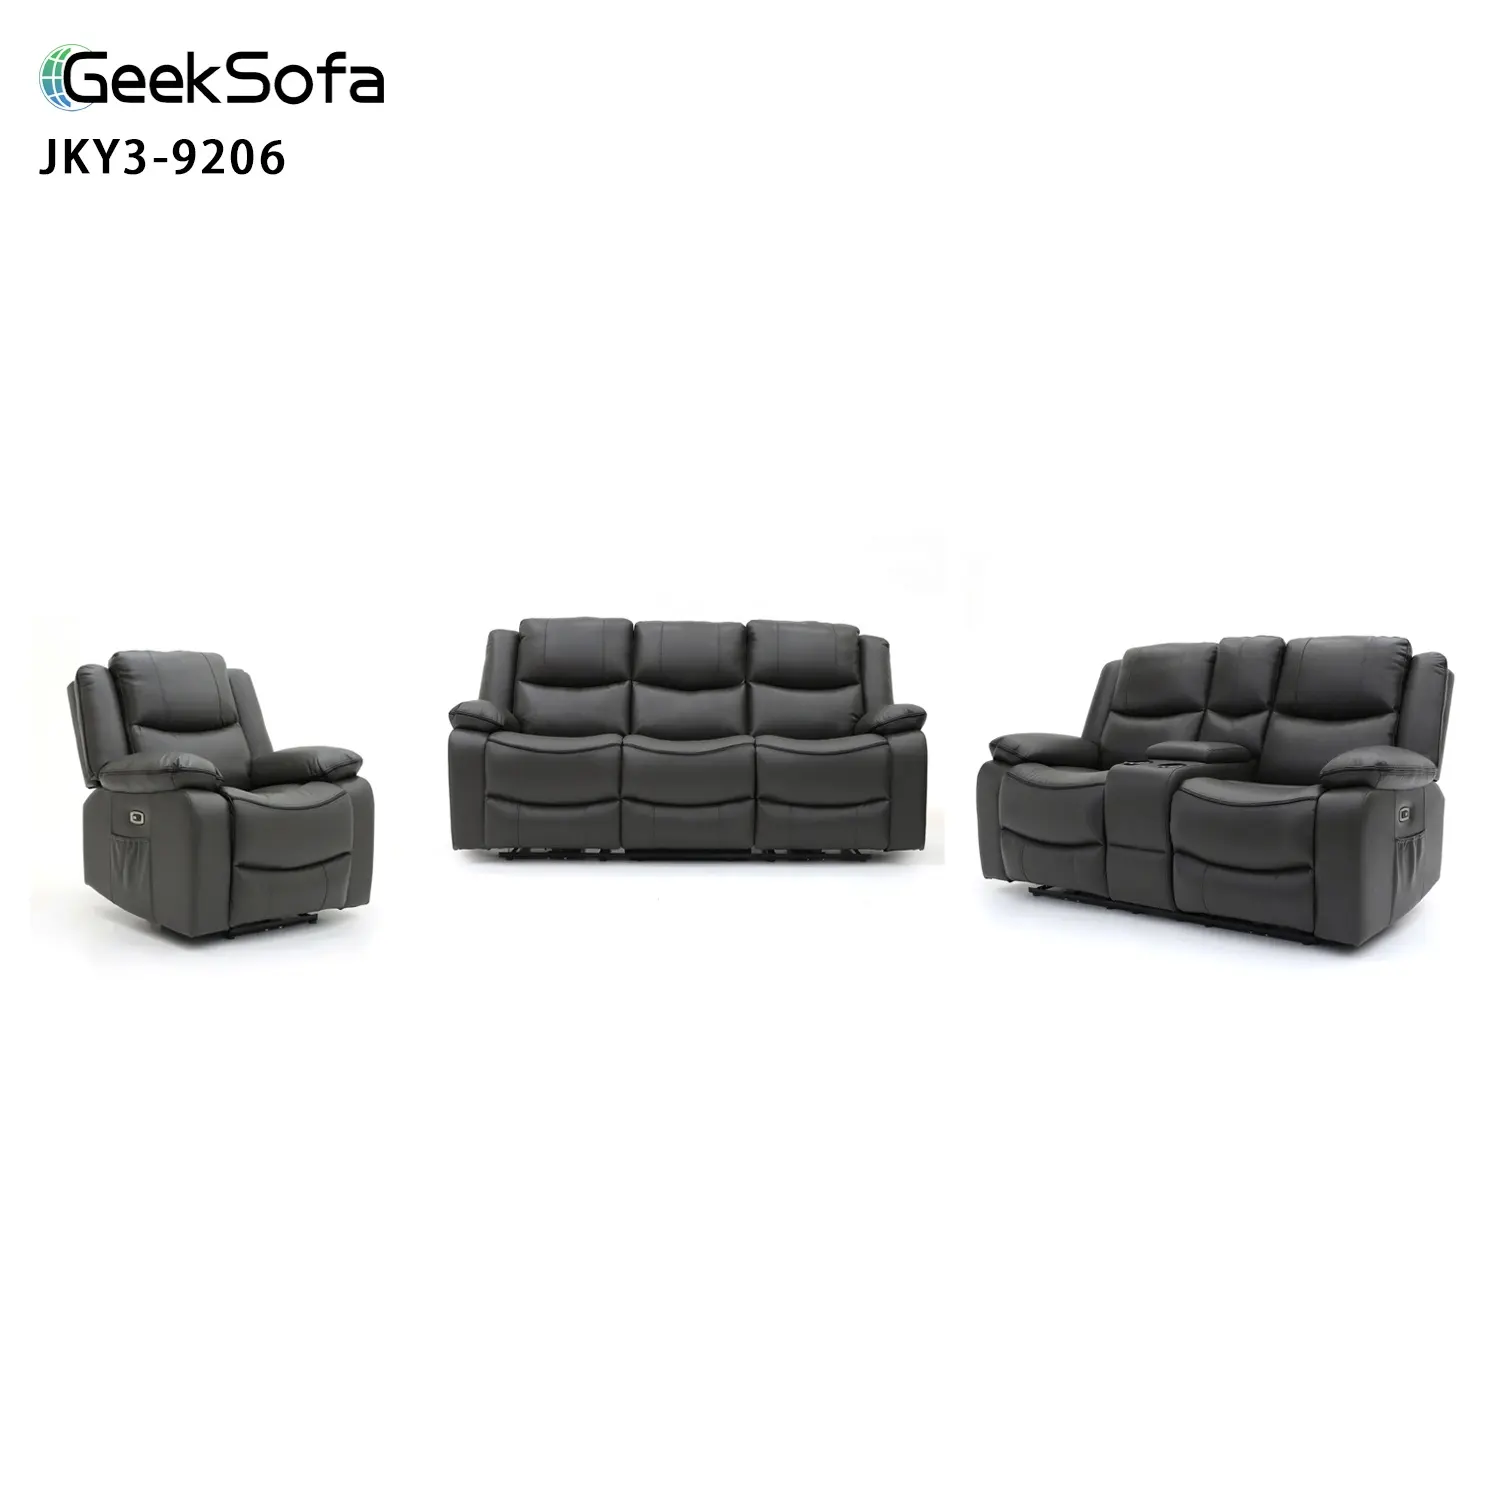 Geeksofa 3 + 2 + 1 Modern Air Leather Power Electric Motion Juego de sofá reclinable con consola y masaje para muebles de sala de estar